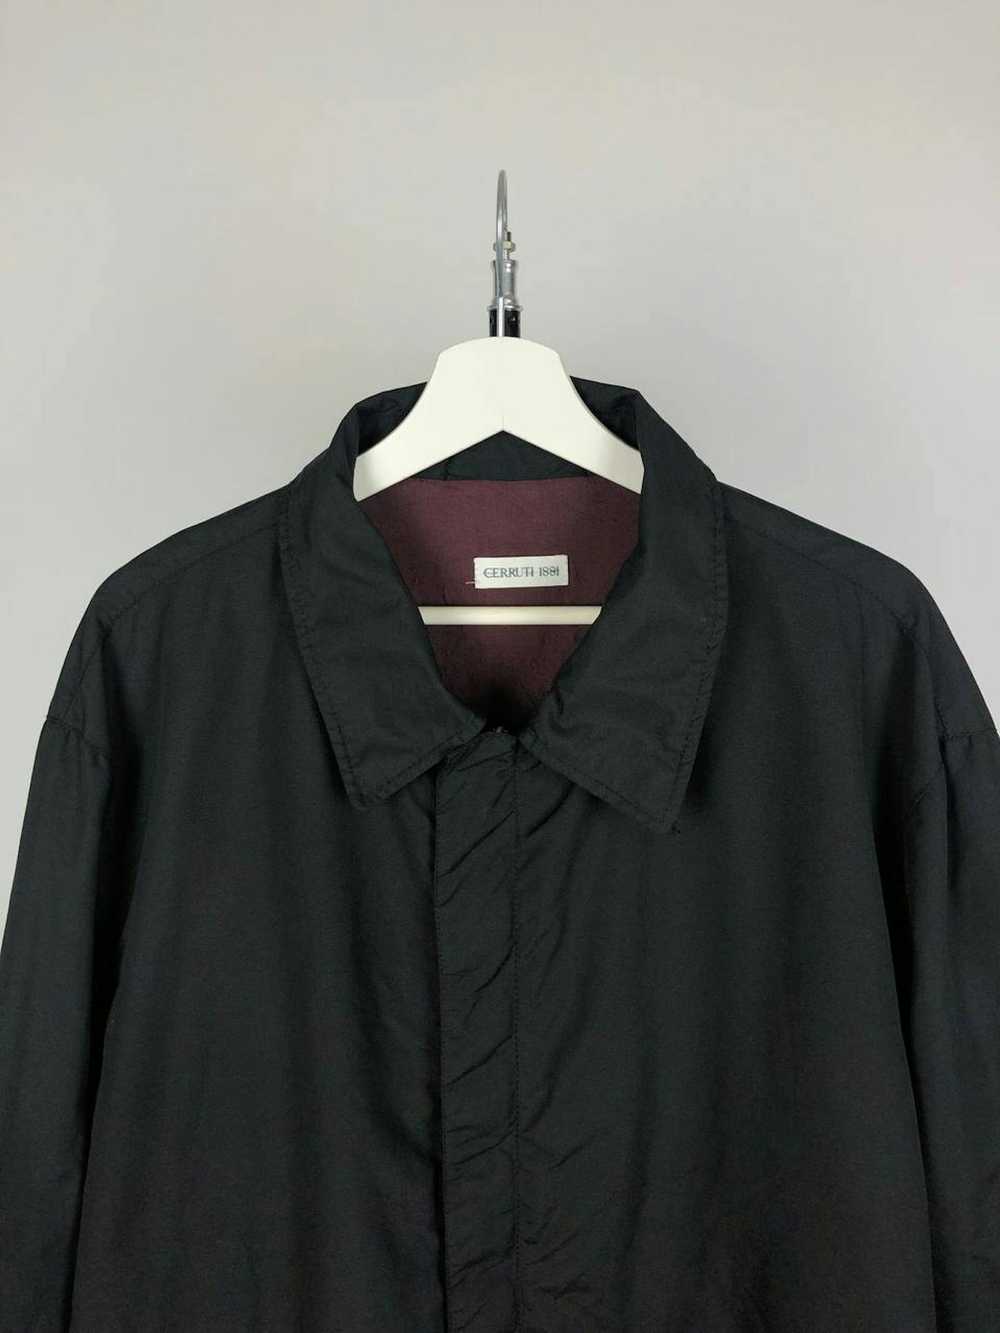 Cerruti 1881 Cerutti 1881 Vintage Jacket Black si… - image 3